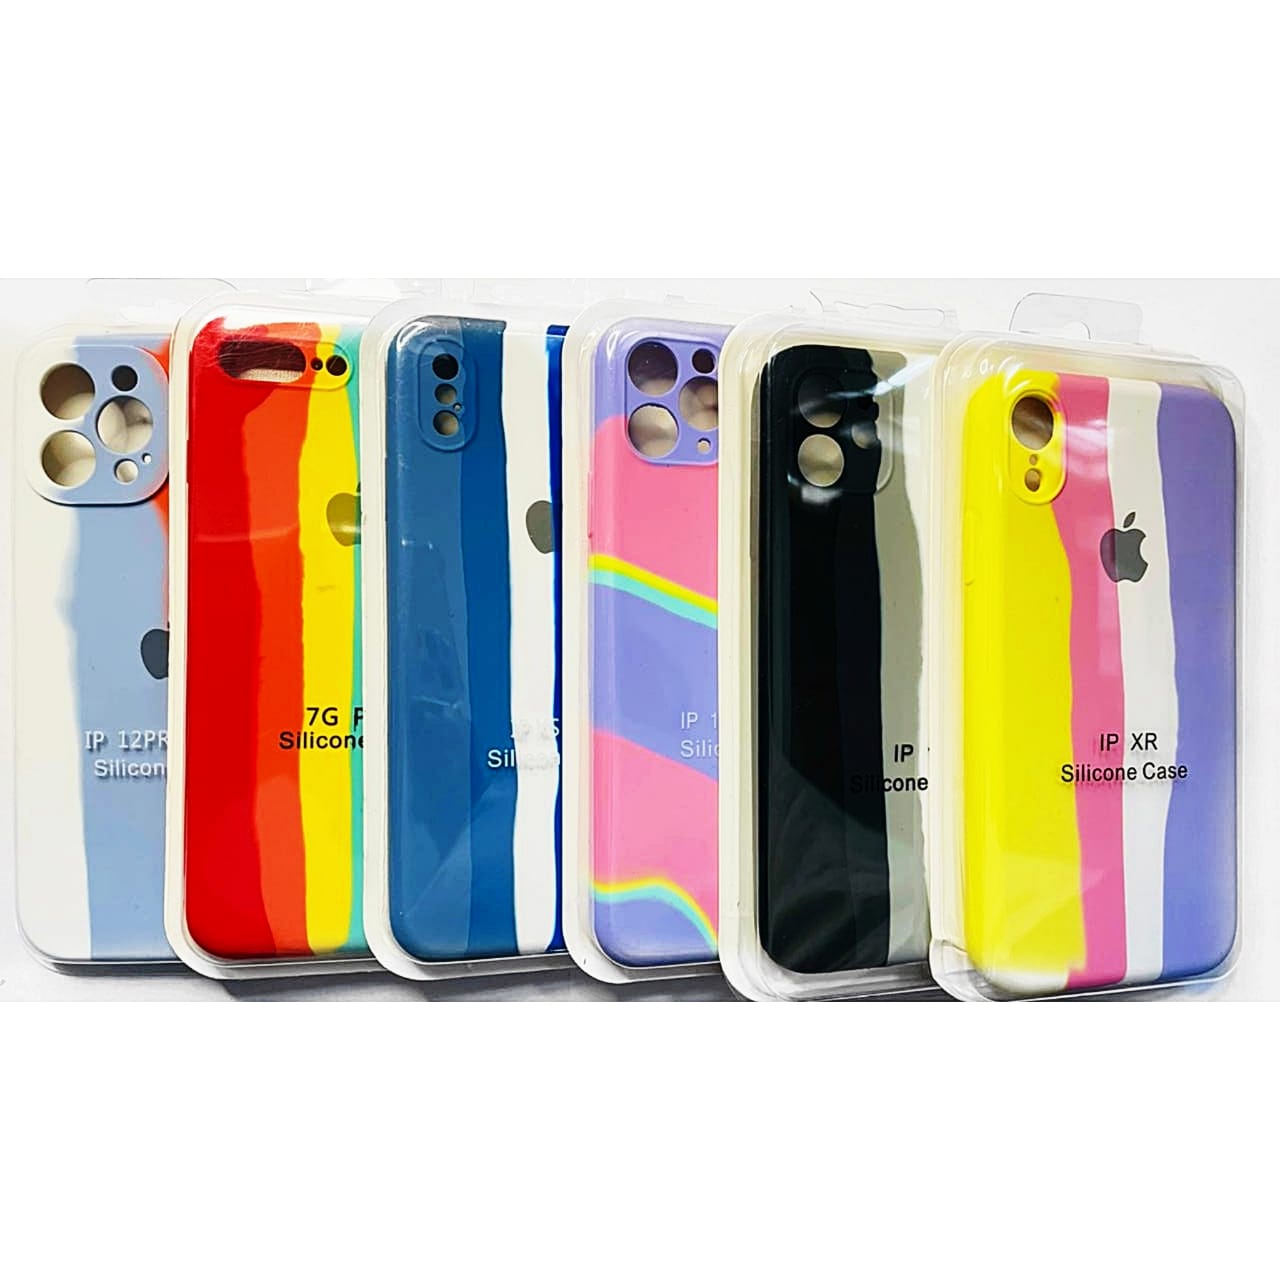 Capa Case Original Iphone 7/8 Plus Cores Pasteis  - Capinhas para Celular - Diversas cores - Central - unidade            Cod. CP IP 7/8 PLUS PASTEIS 